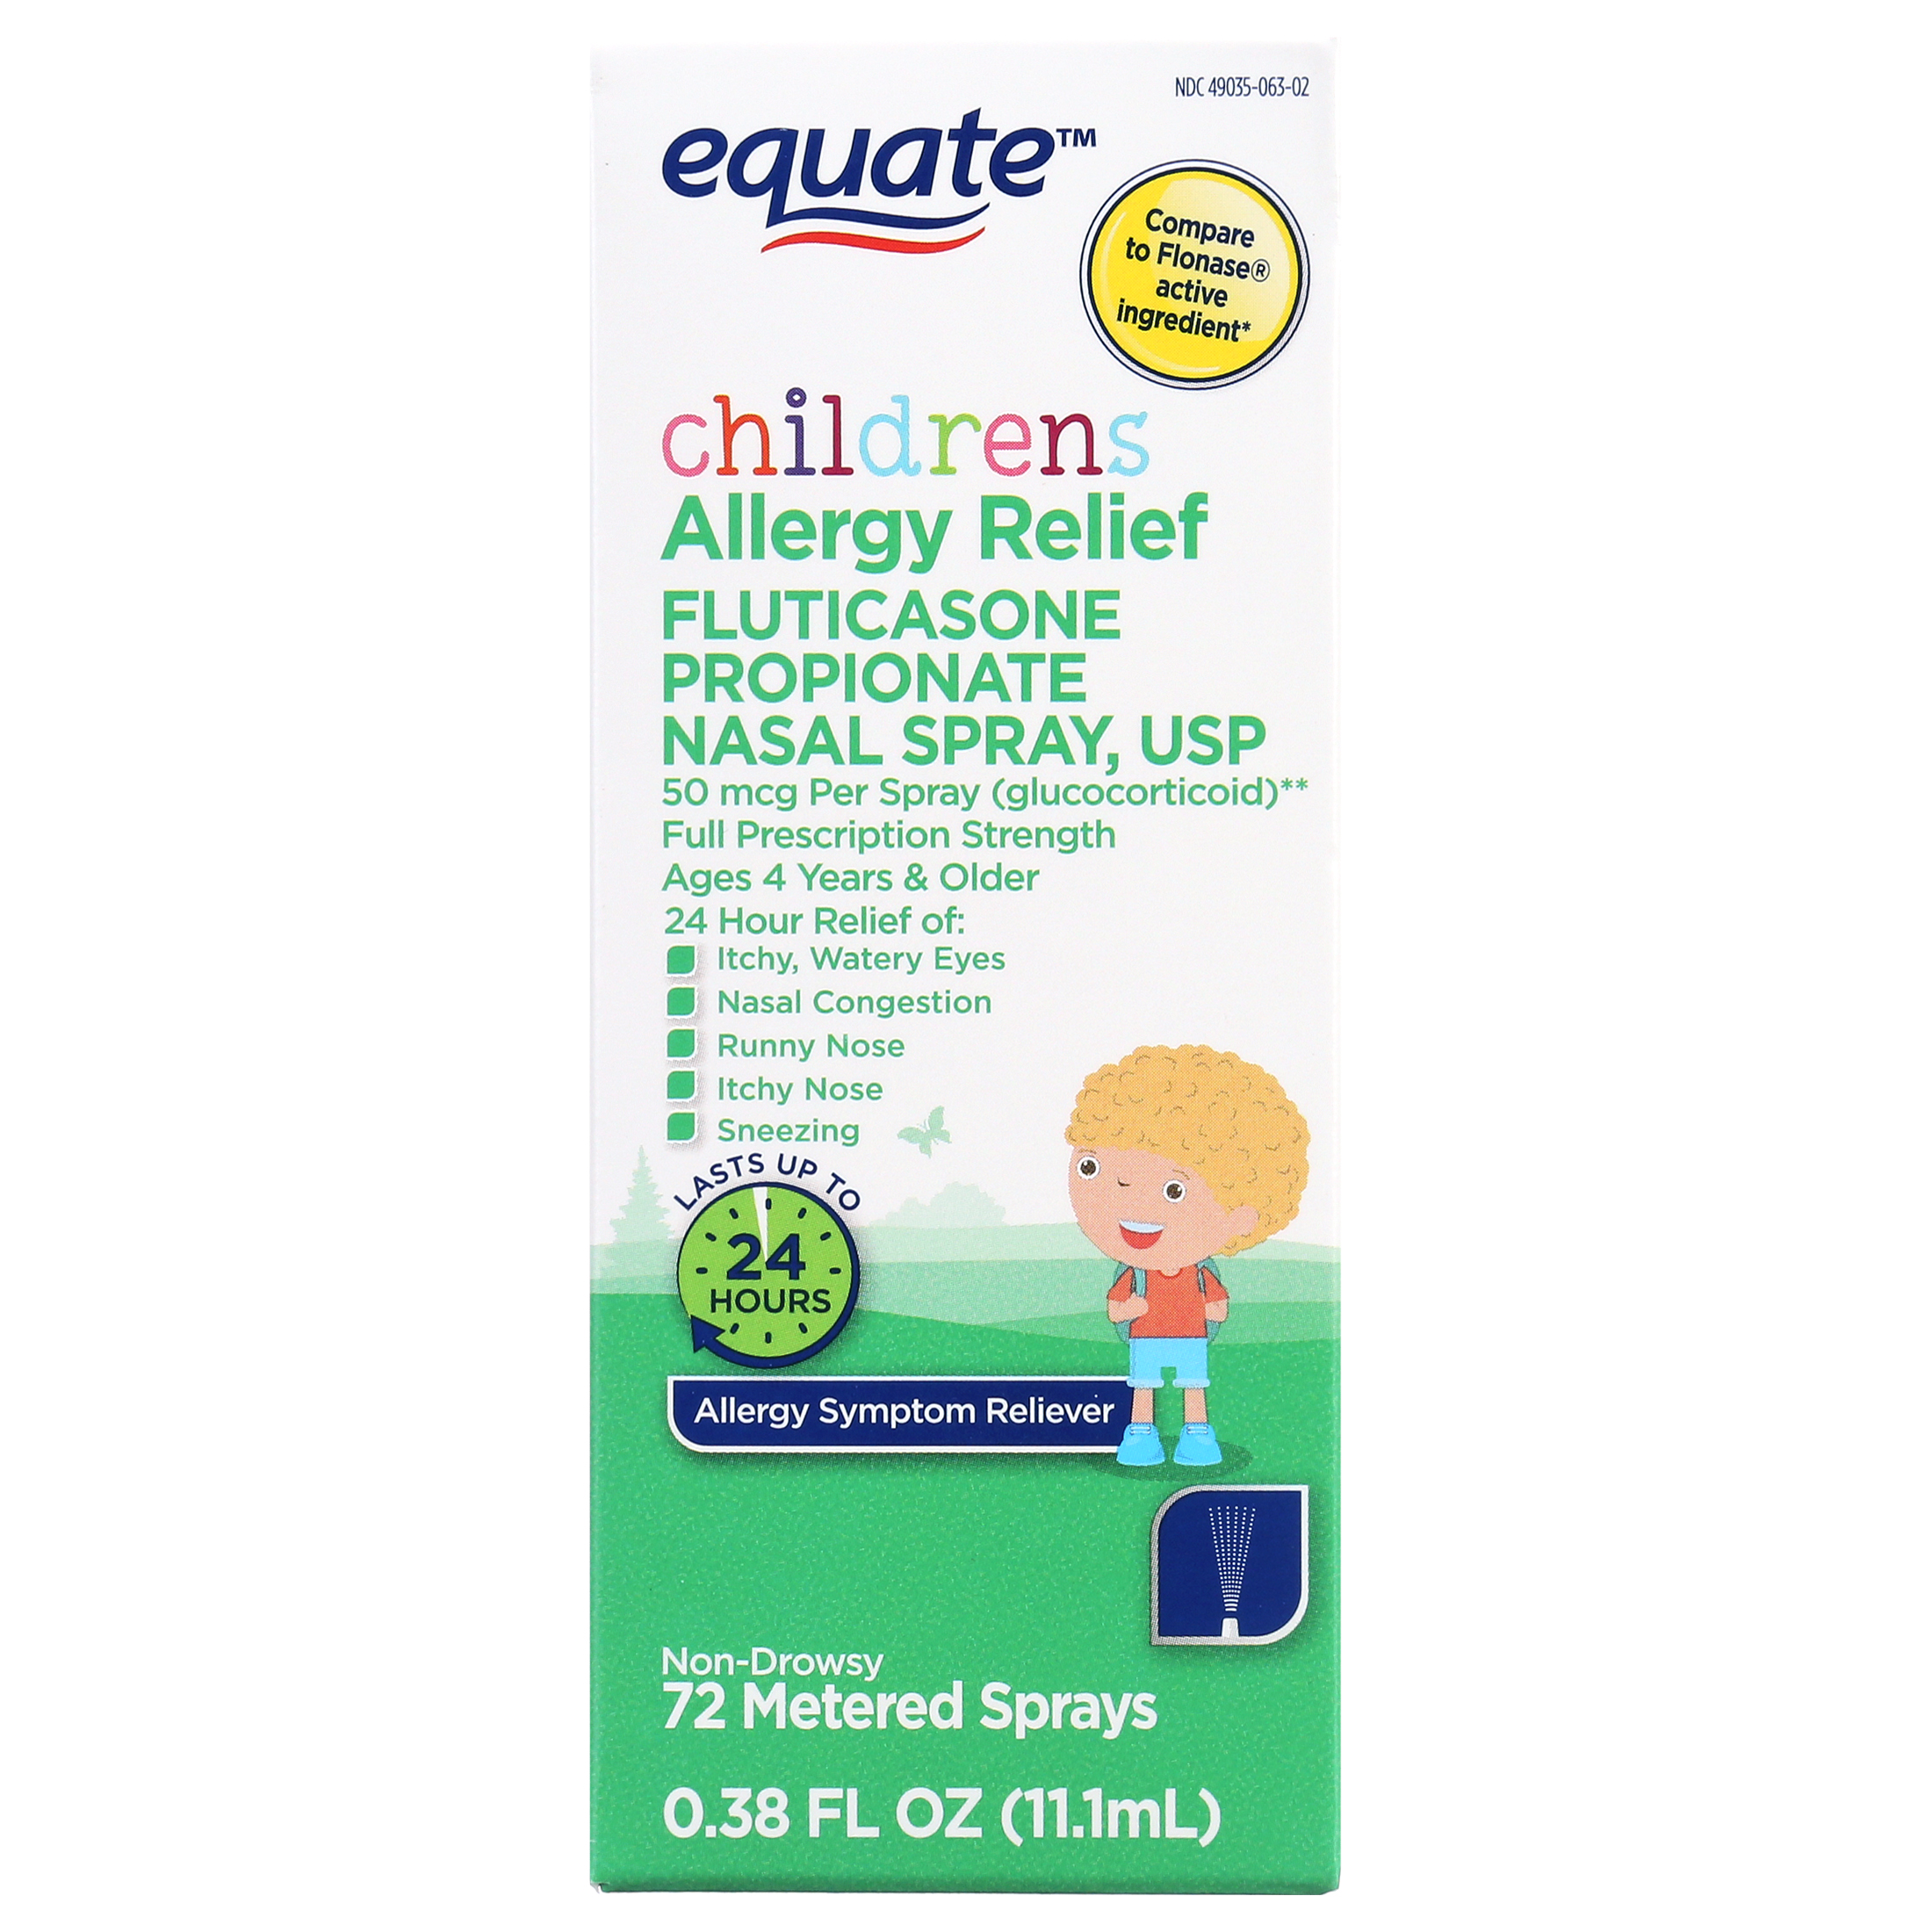 Equate Children's Allergy Relief Fluticasone Propionate Nasal Spray, 50 mcg, Ages 4 Years & Older, 0.34 fl oz. - image 1 of 8